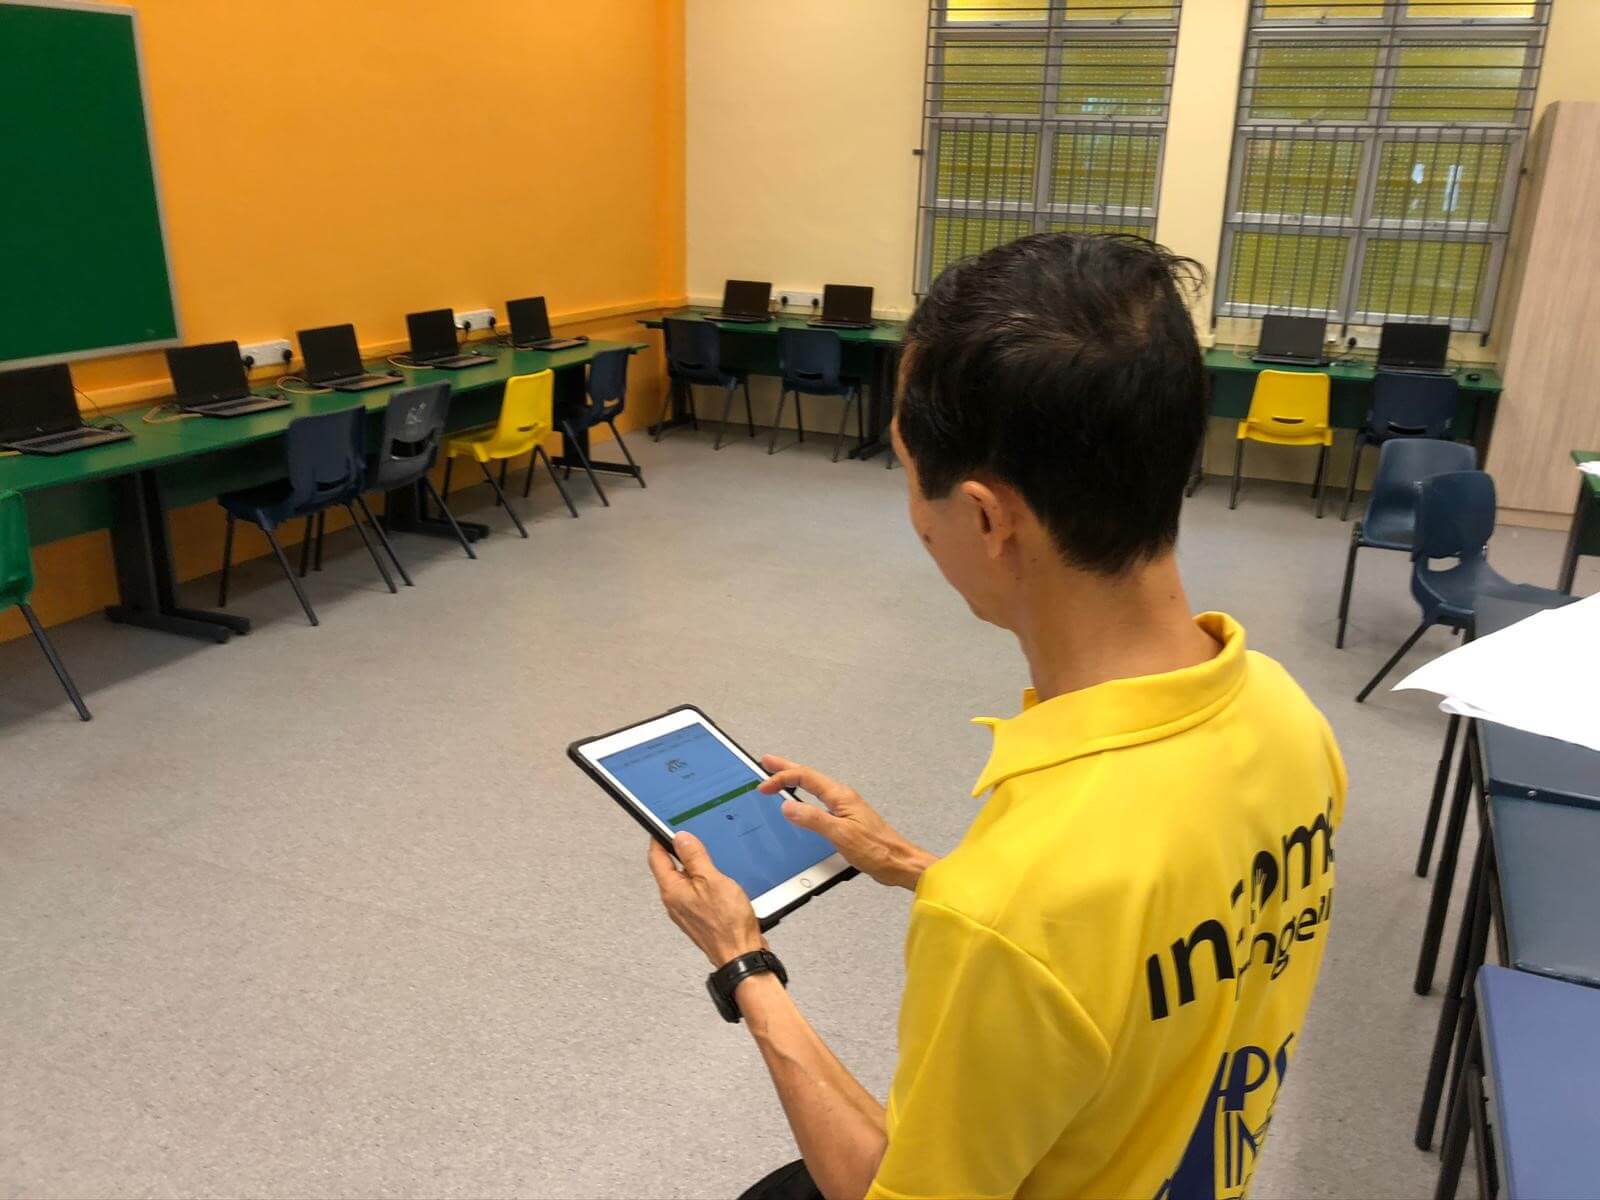 NewDVR company profile, case study: Singapore Smart School